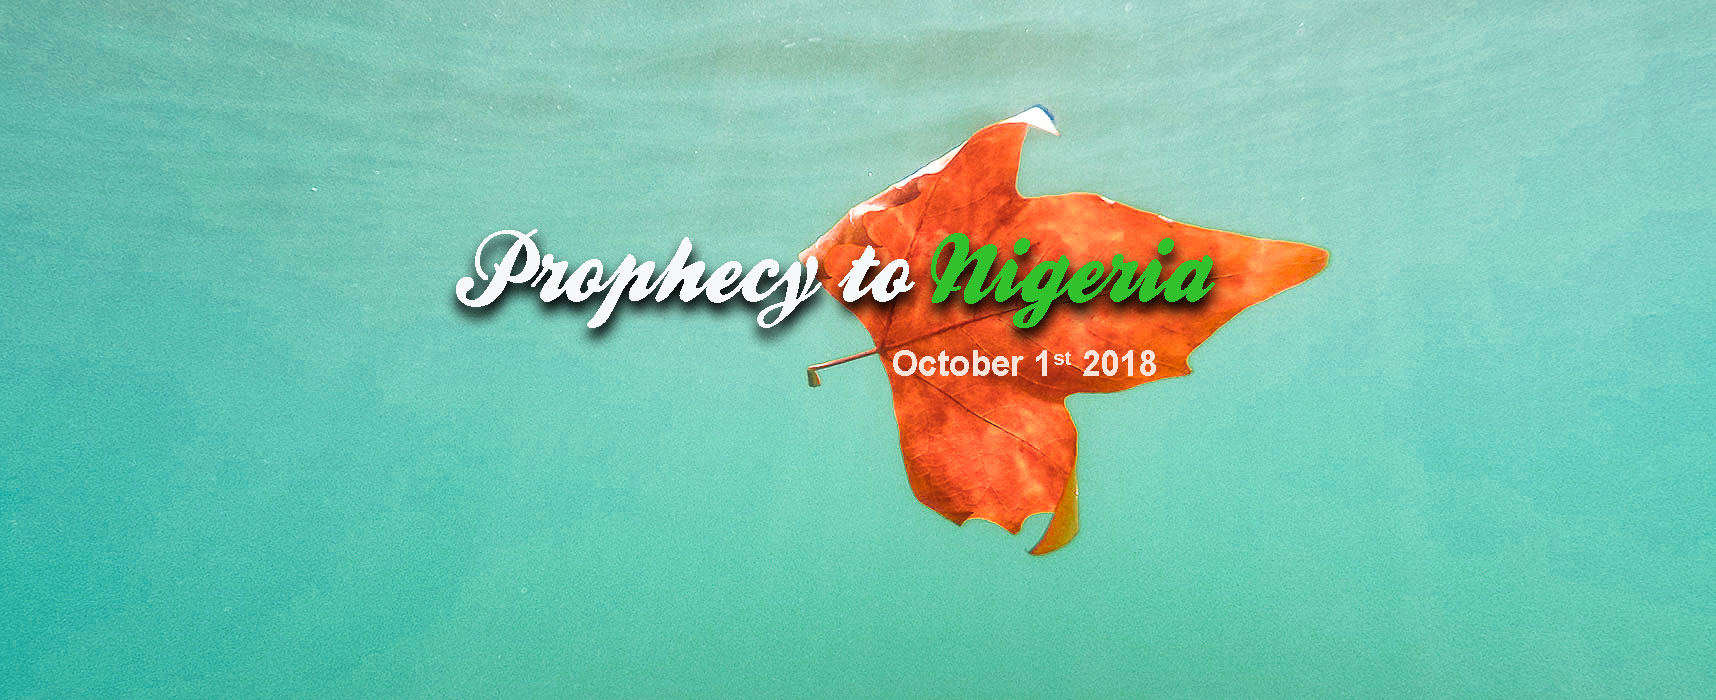 preamble-prophecy-nigeria